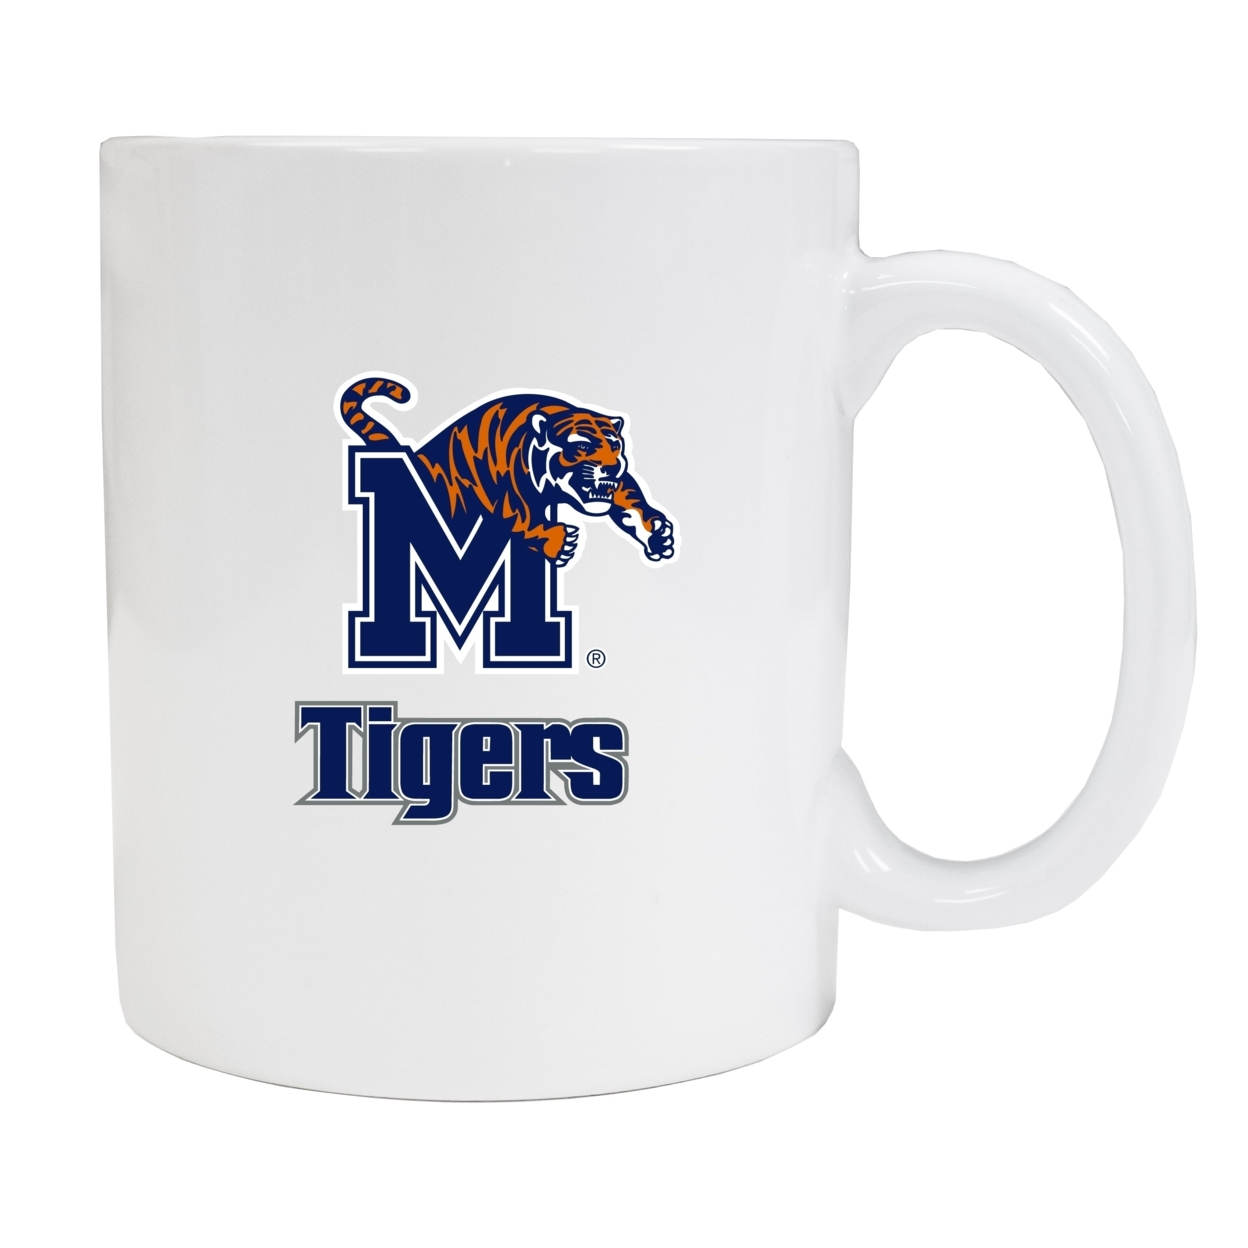 Memphis Tigers White Ceramic Mug (White).